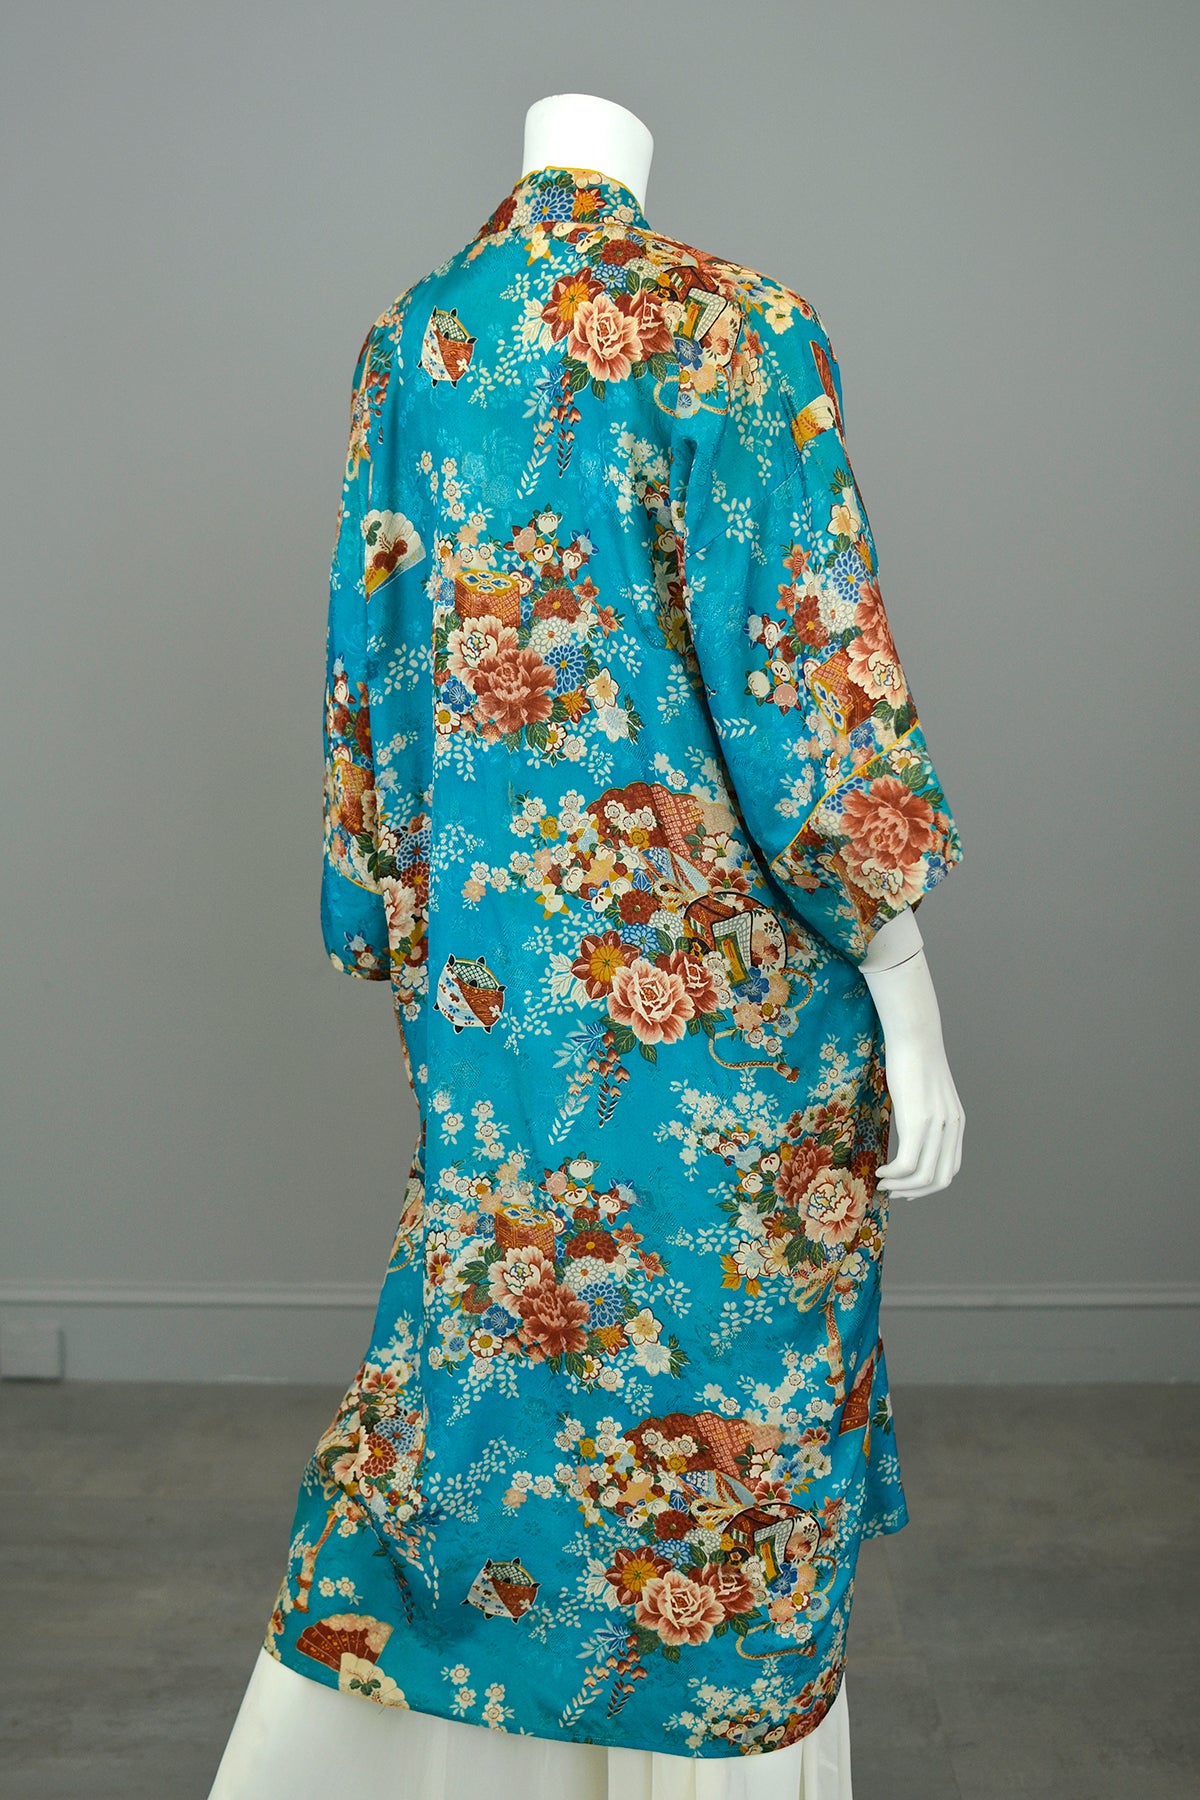 1940s Hand Printed Rayon Kimono Robe made in Japan